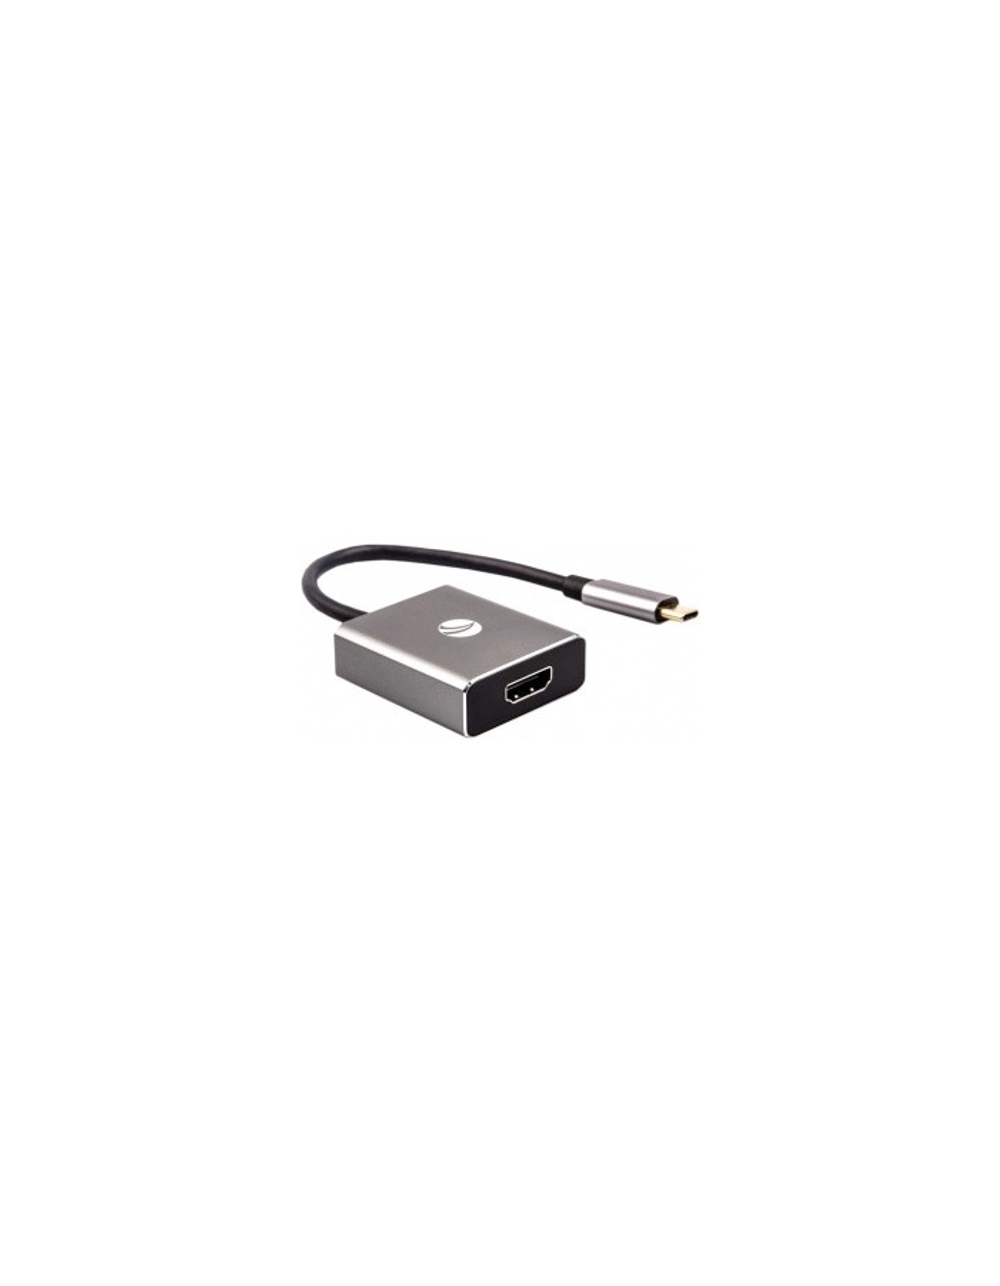 VCOM CU423T Адаптер USB 3.1 Type-Cm --&gt;HDMI A(f) 4K@60Hz, Aluminum Shell, VCOM &lt;CU423T&gt; [04895182217201]